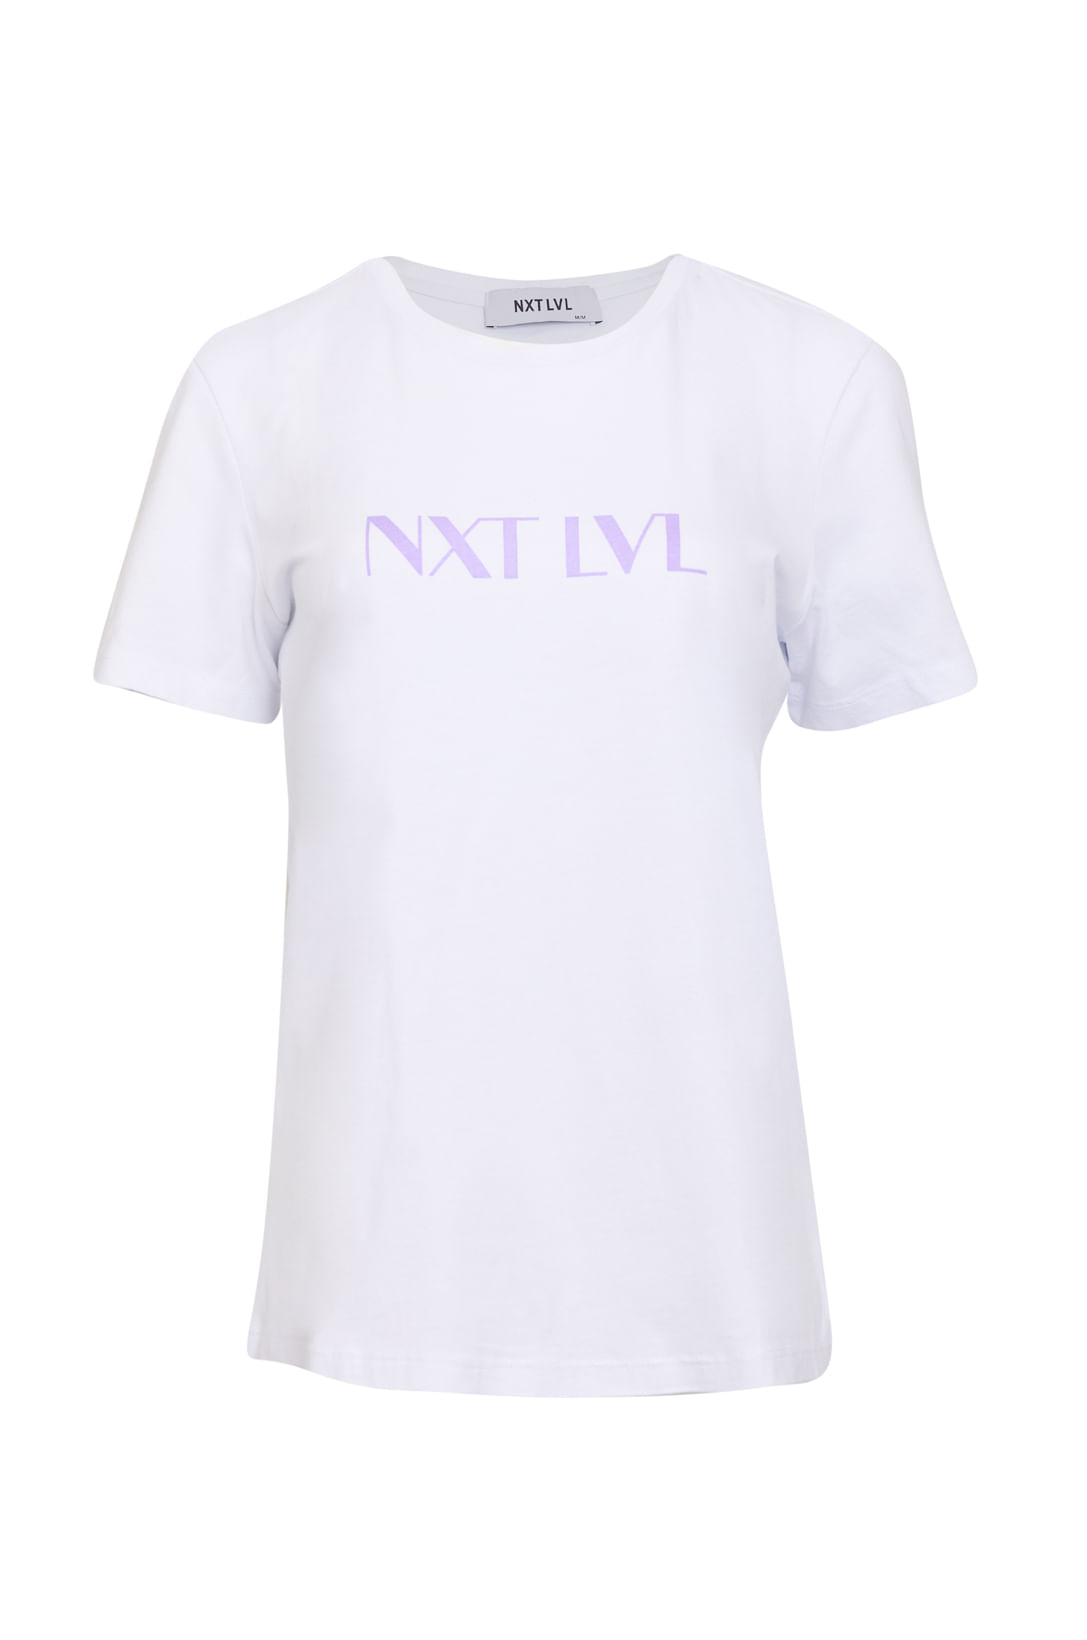 T-shirt NXT LVL